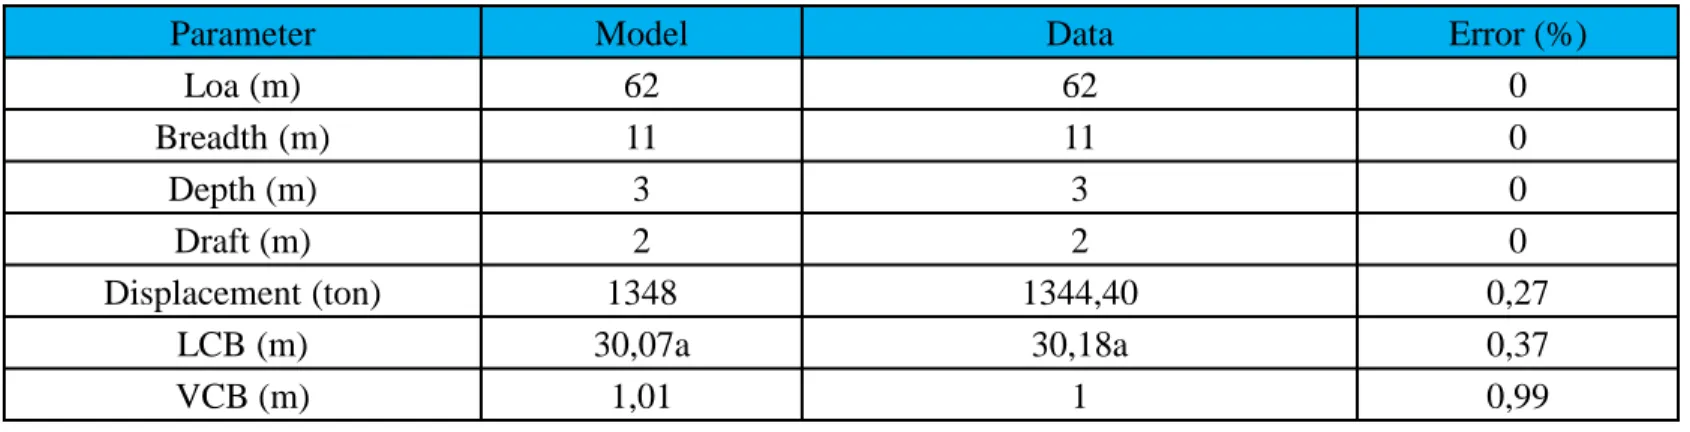 Tabel 11. Validasi Model  Pipe Lay Barge